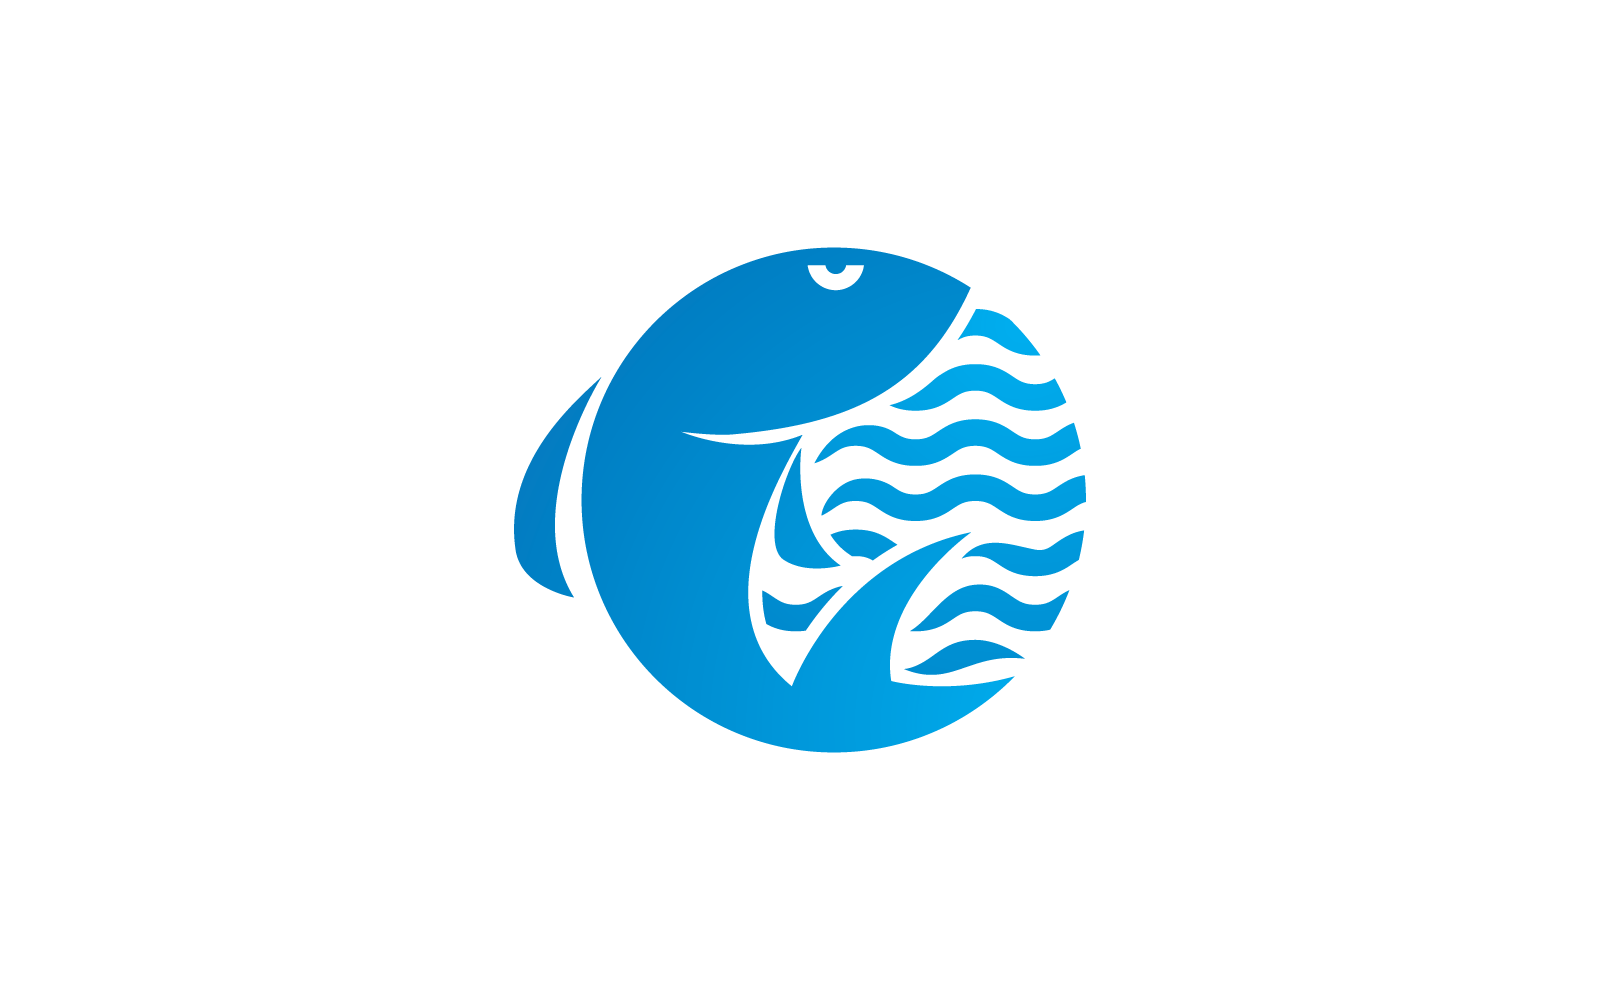 Fish ilustration logo icon vector design template